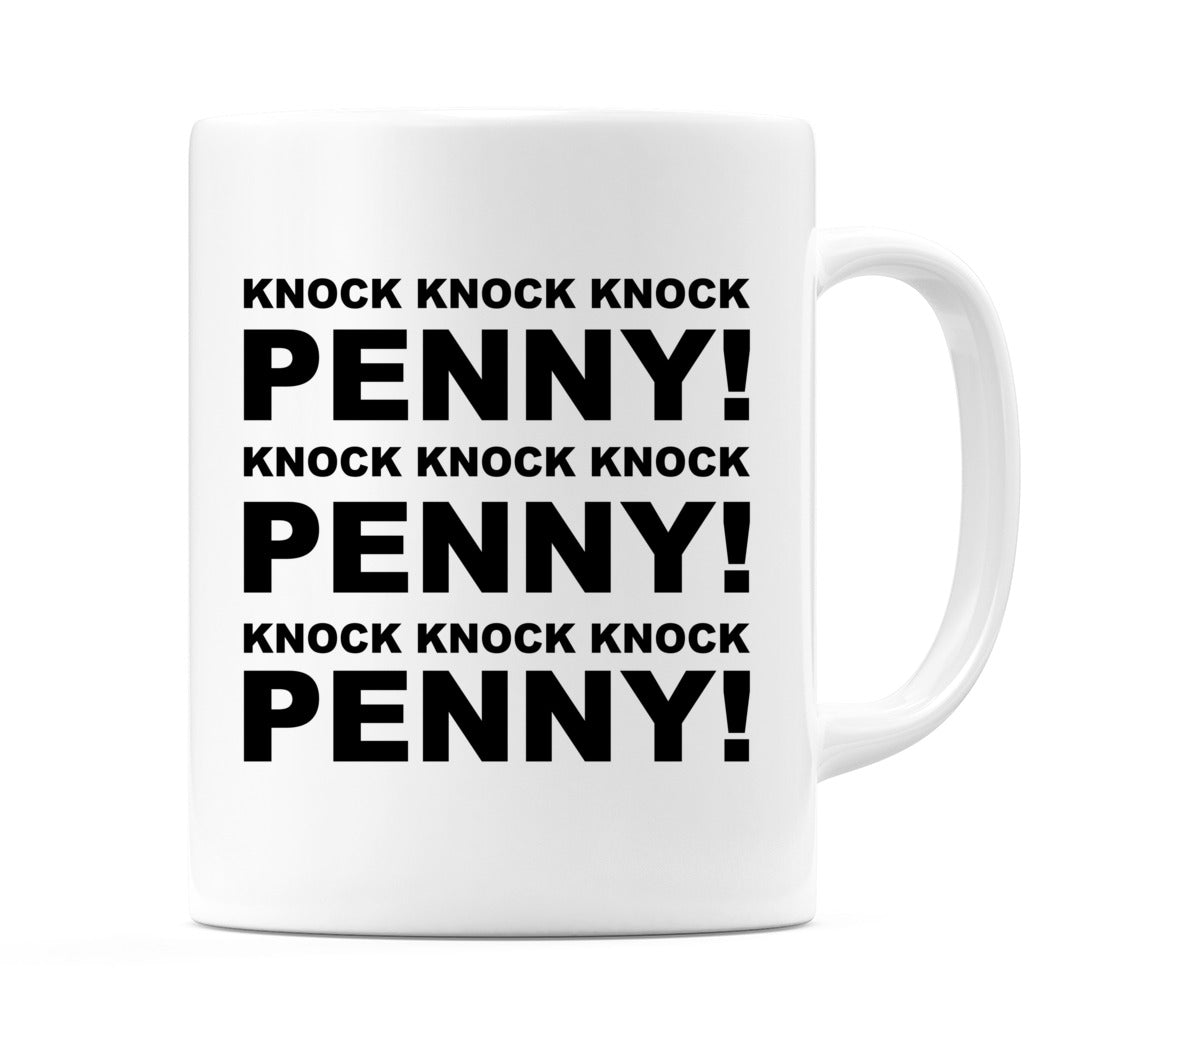 Knock Knock Knock Penny! Mug